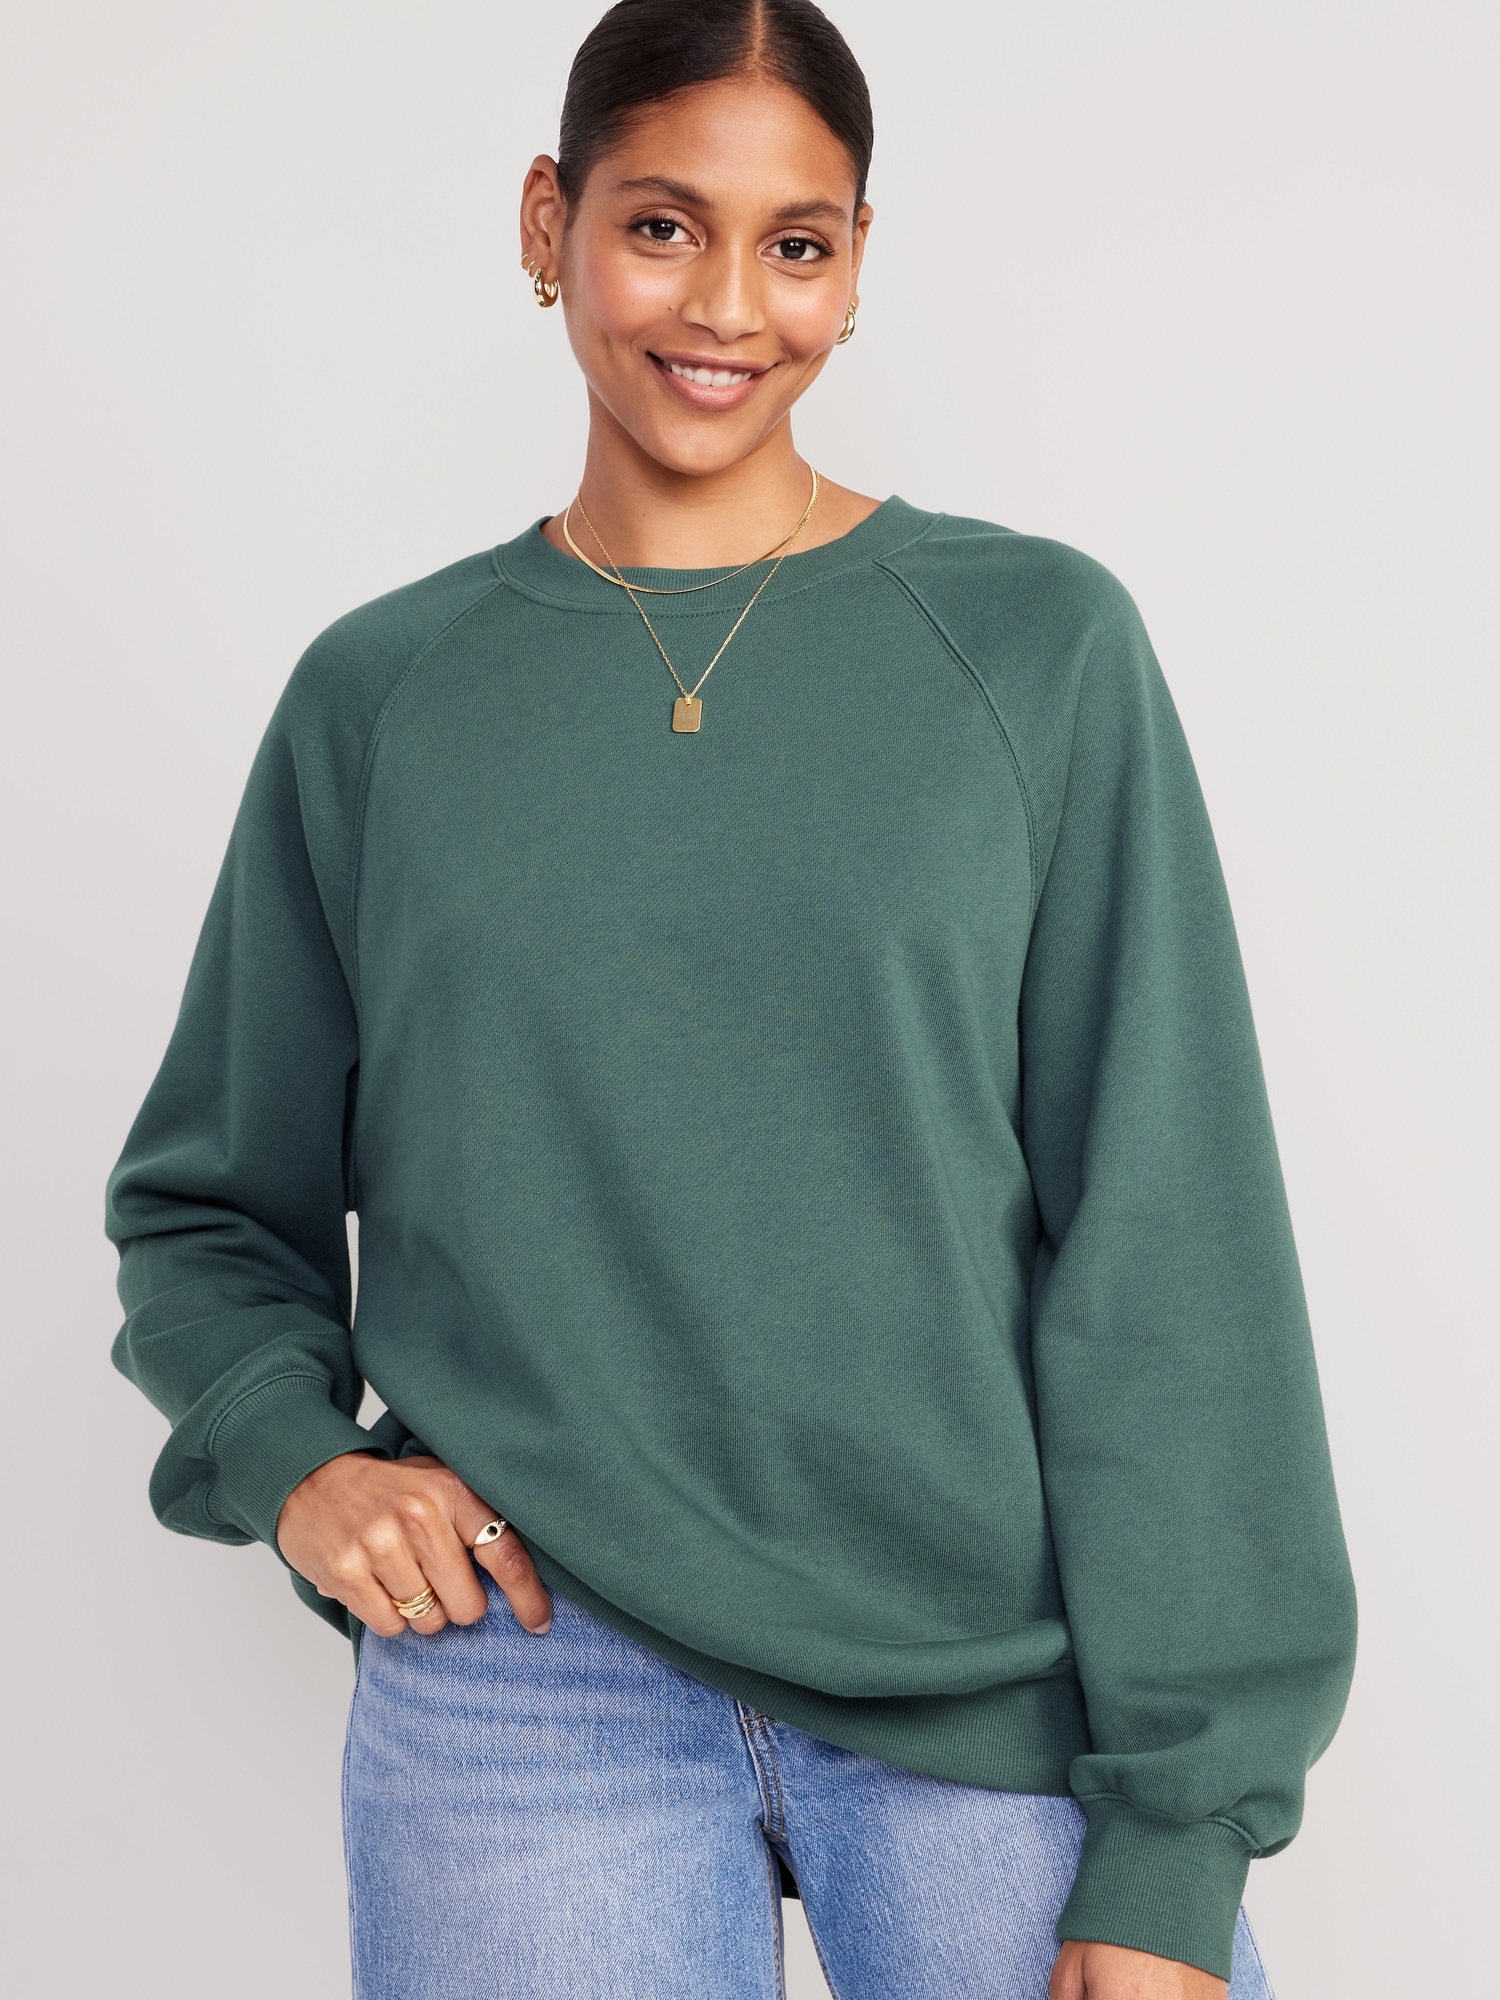 Oversized Vintage Tunic Sweatshirt for Women | Old Navy